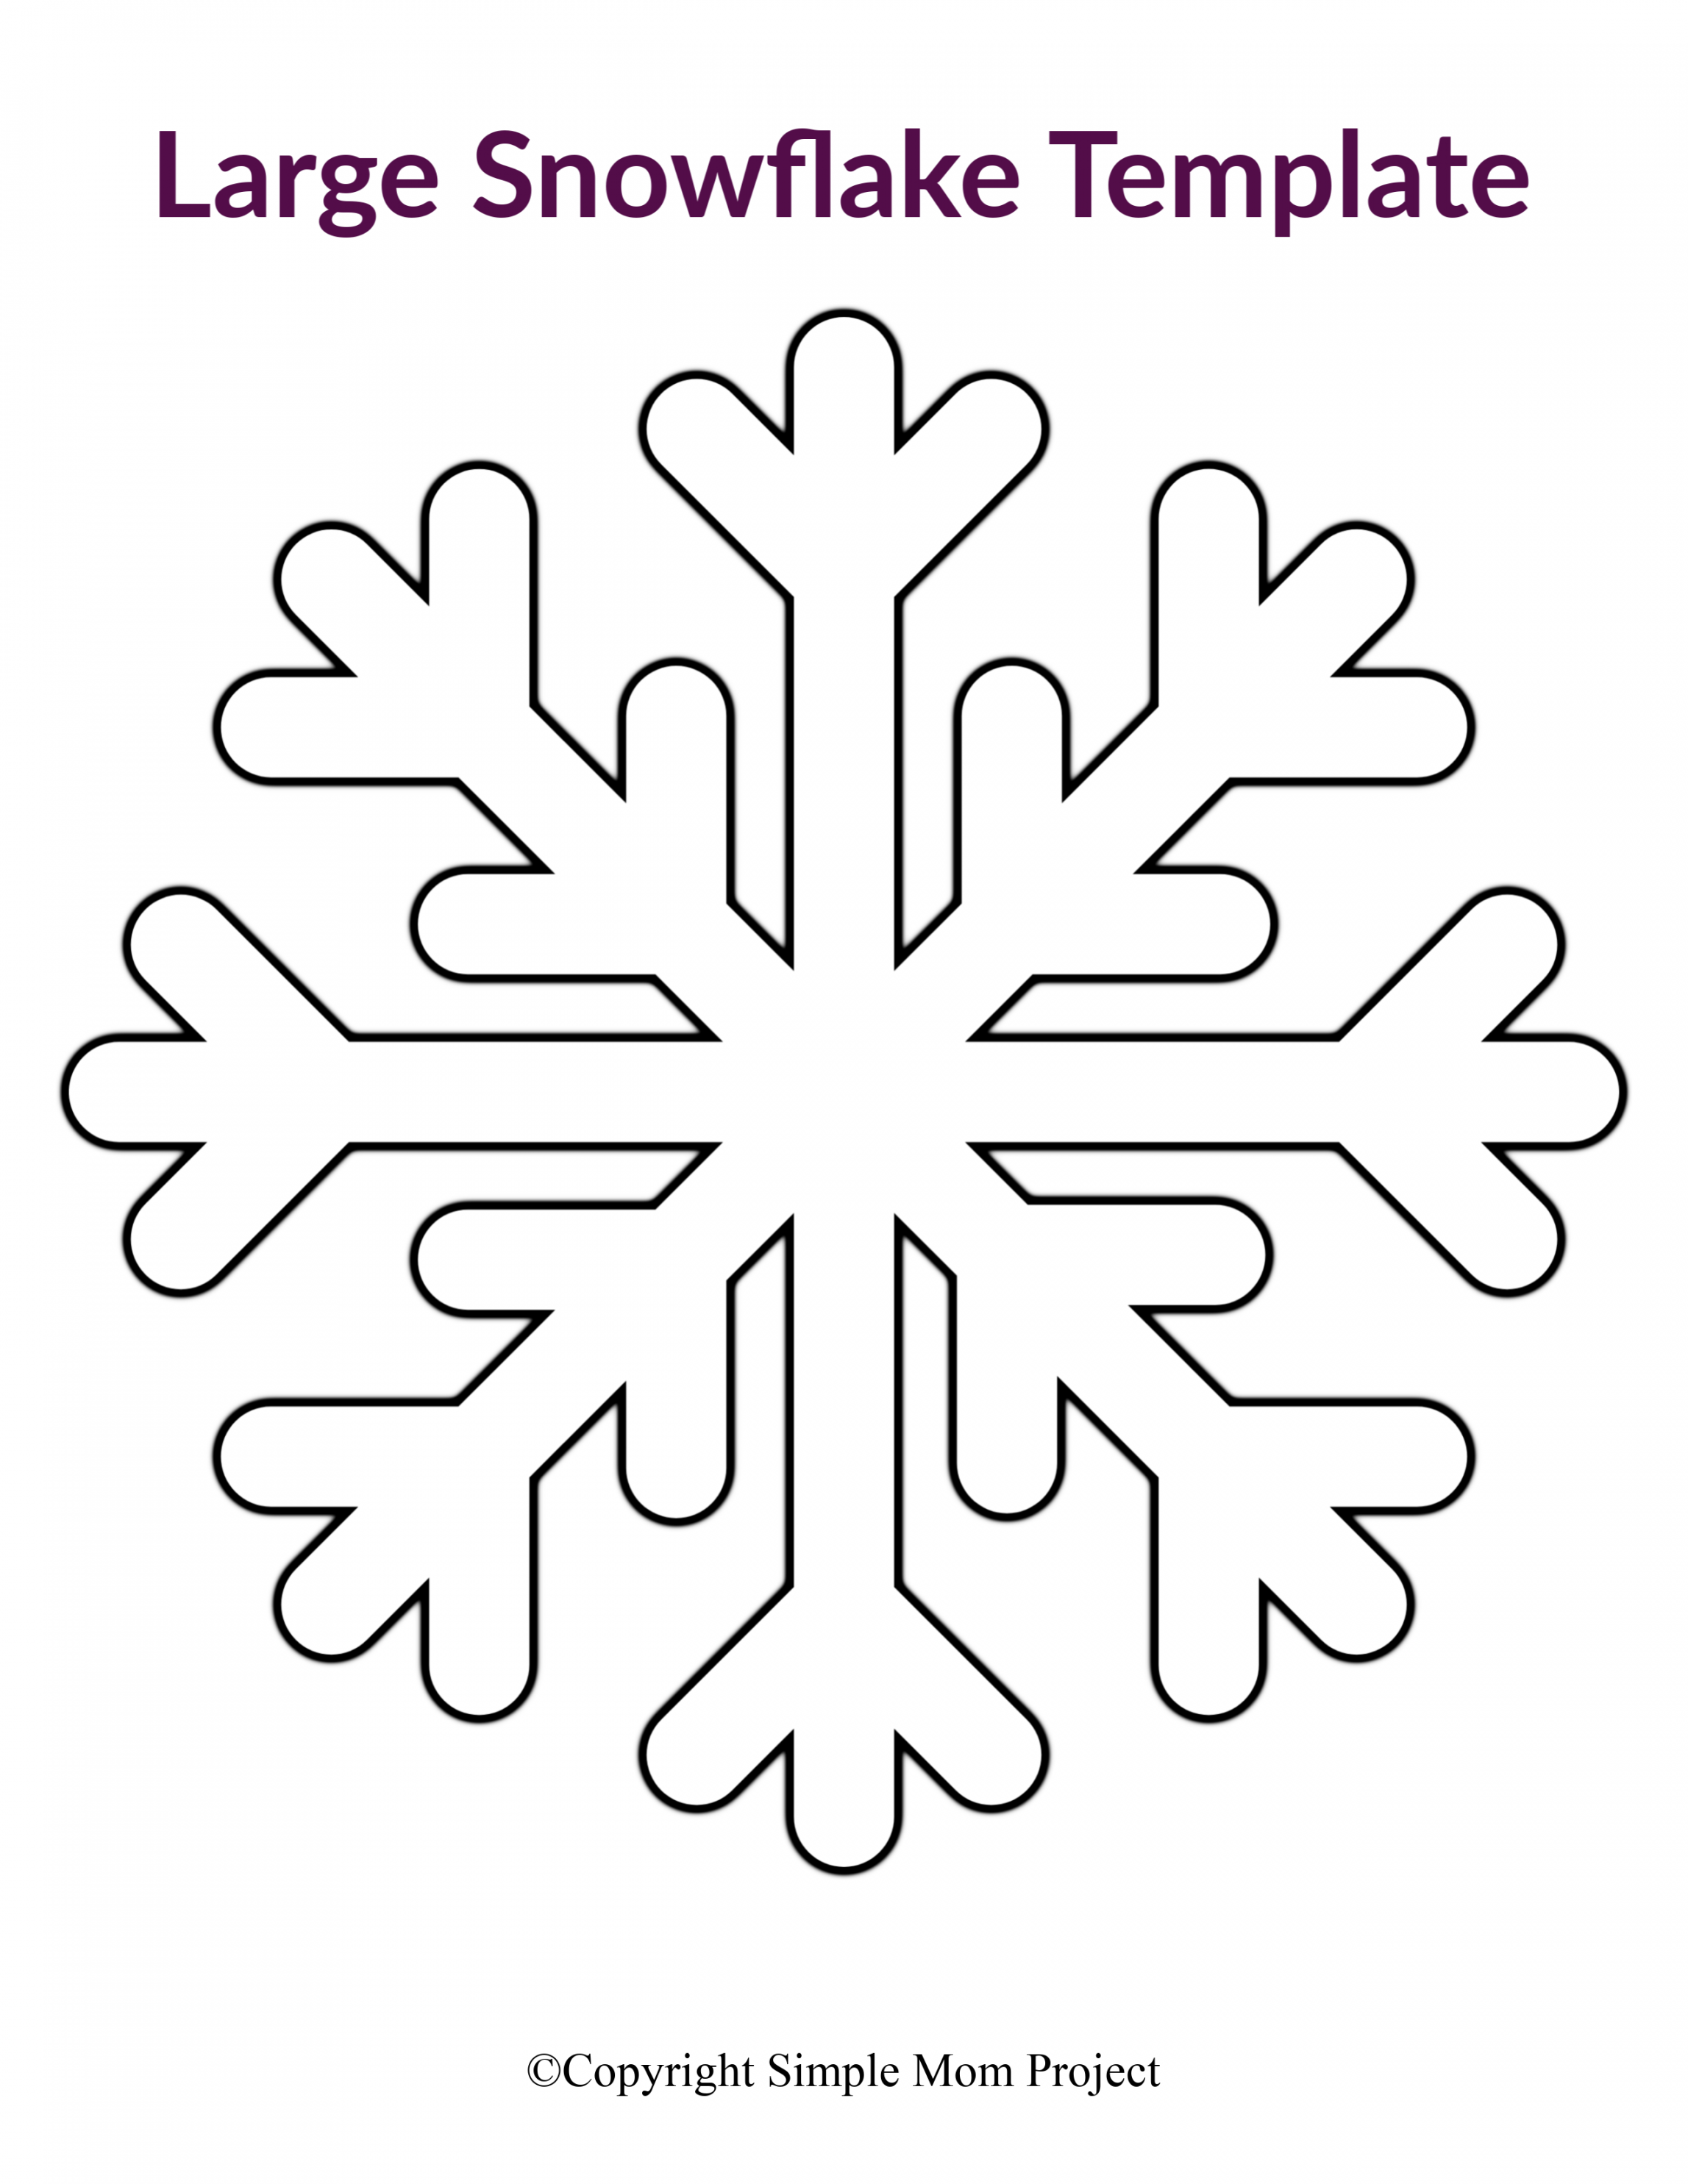 Free Printable Large Snowflake Templates - Simple Mom Project - FREE Printables - Printable Snowflake Stencils